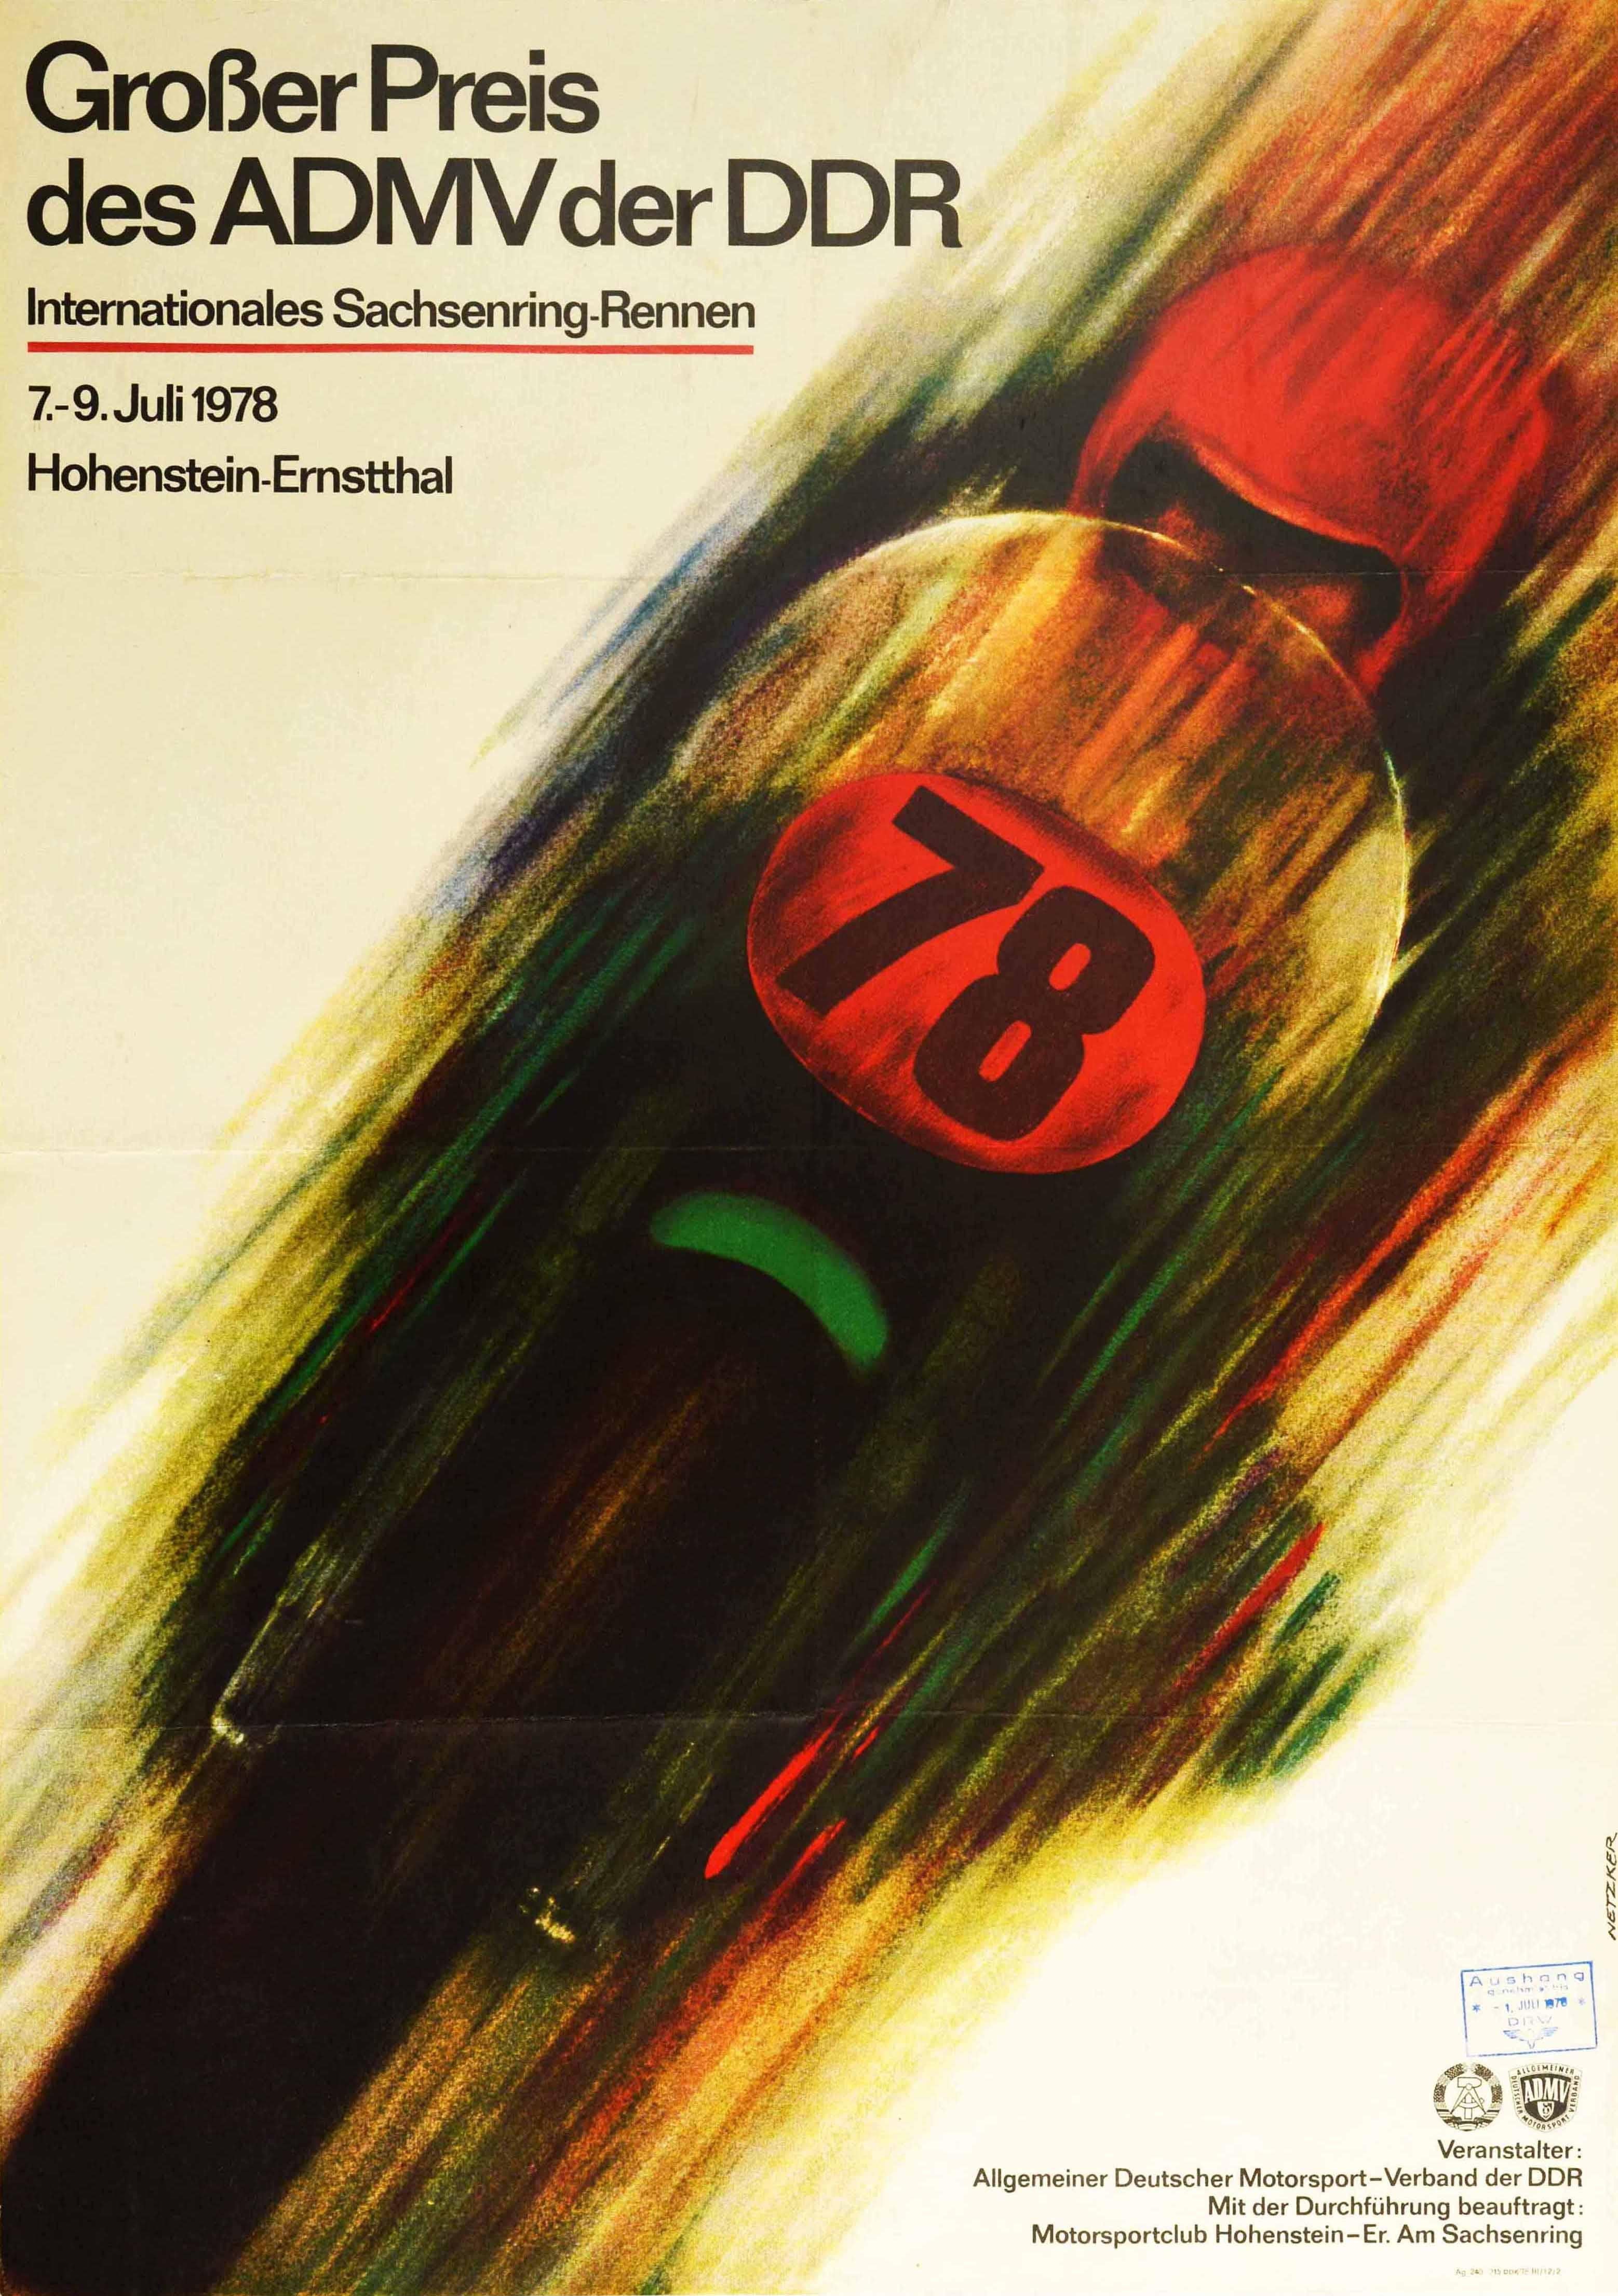 Netzker Print - Original Vintage Sport Poster Grand Prix Motorcycle Race Sachsenring ADMV DDR